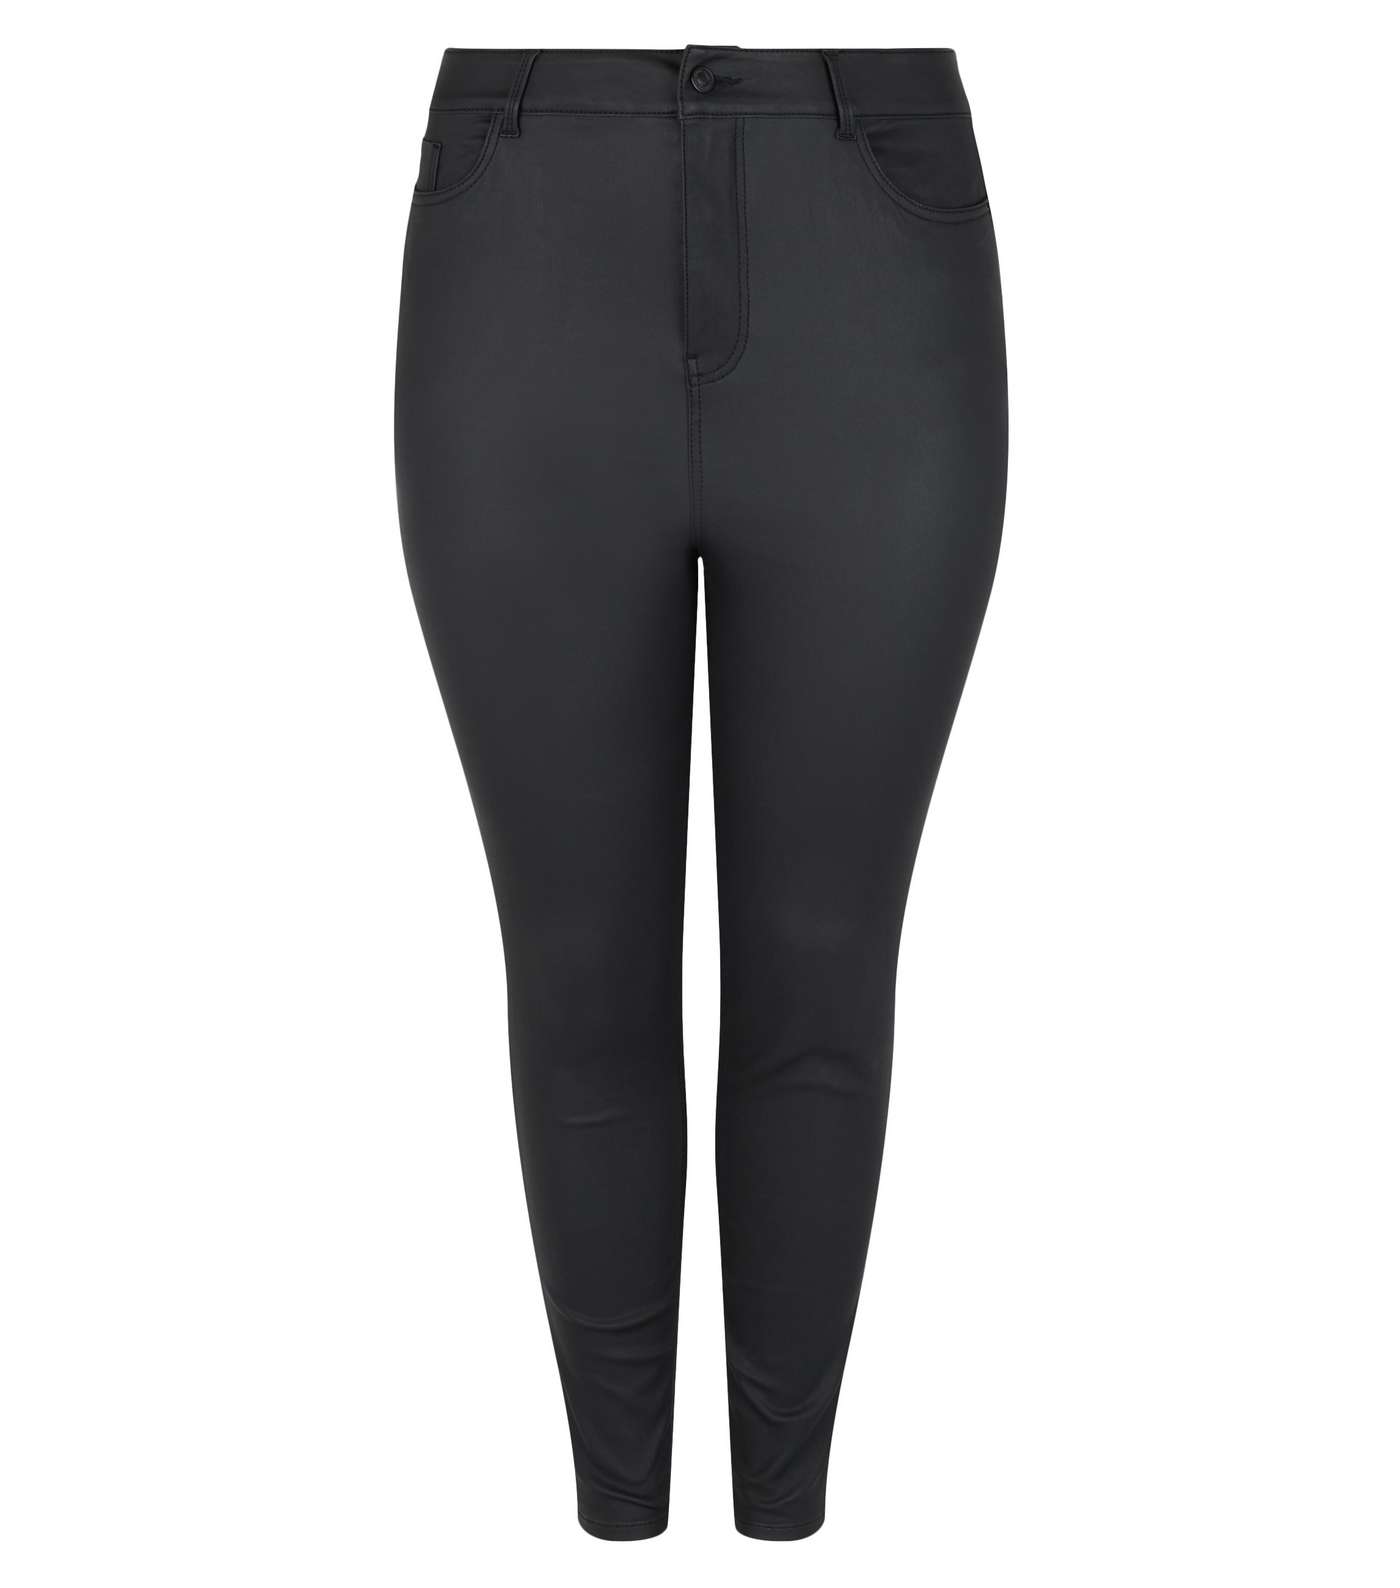 Curves Black Leather-Look 'Lift & Shape' Jenna Skinny Jeans Image 5